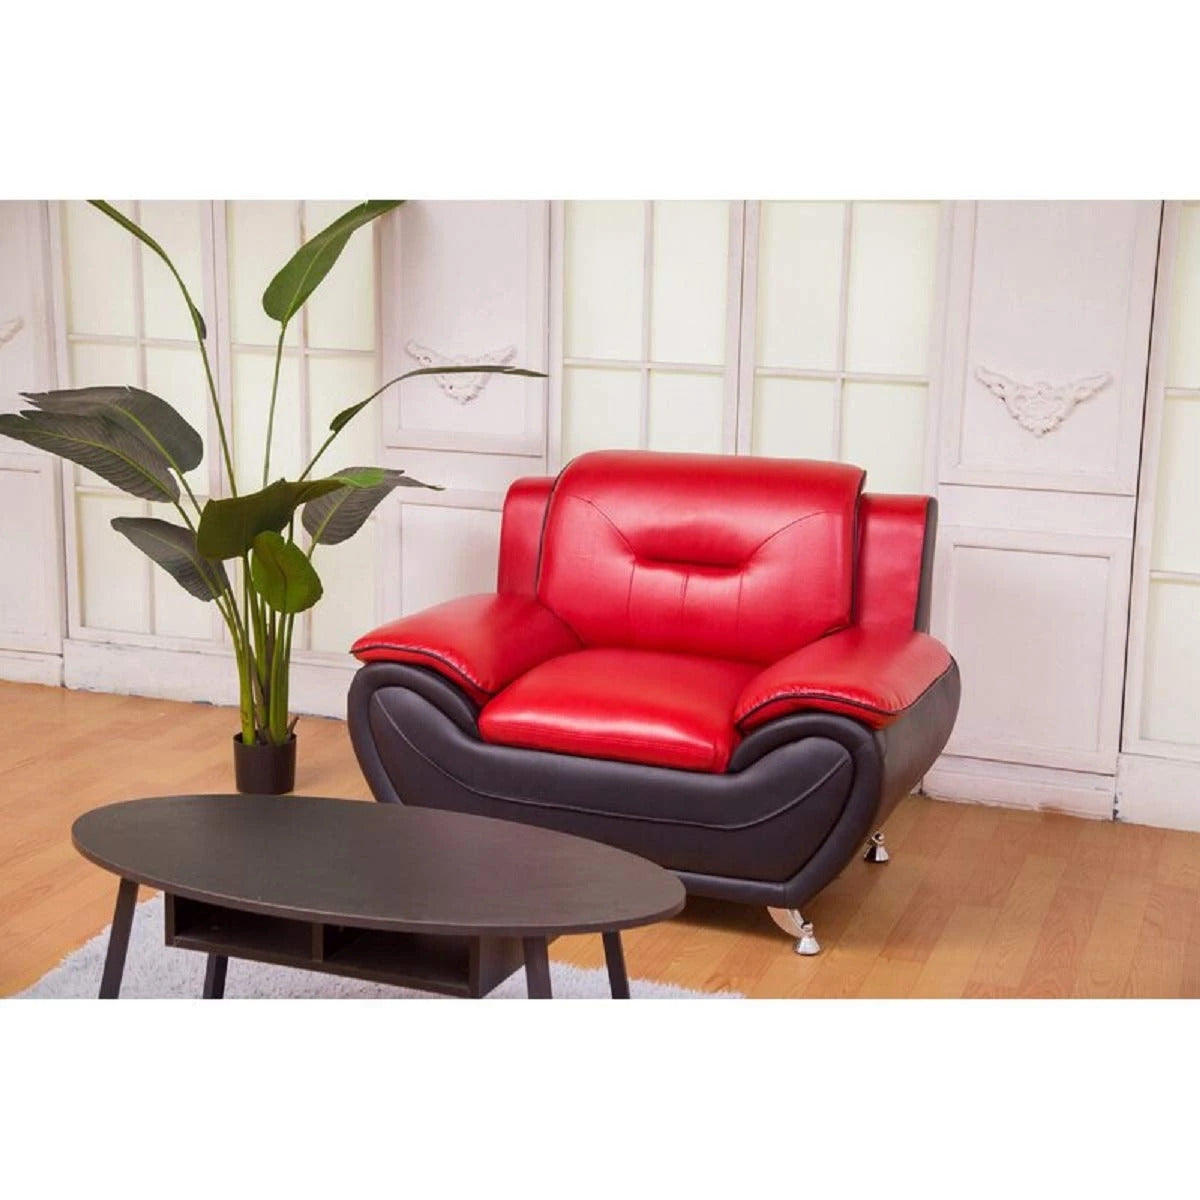 Designer Sofa Set:- ZIAA 3+2+1 Leatherette Sofa Set